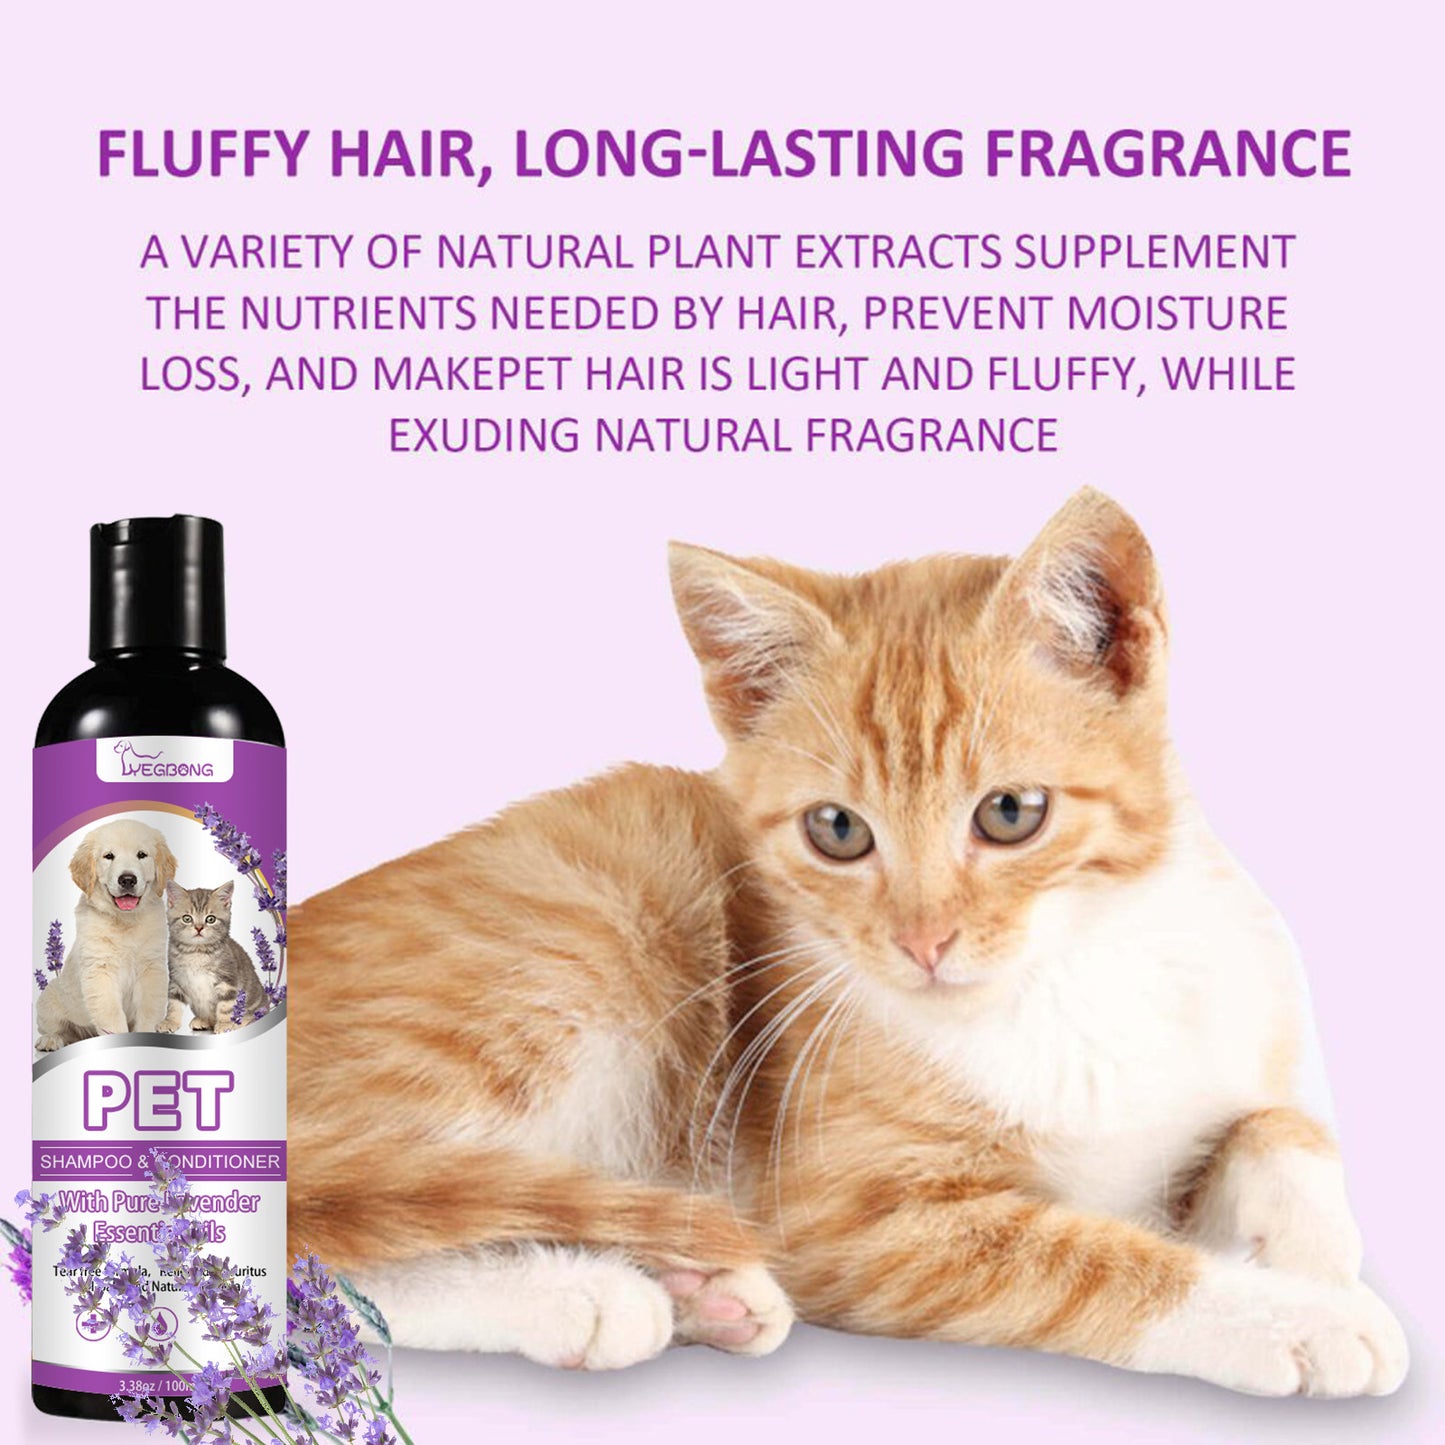 Lavender Breeze Pet Spa Shampoo and Conditioner